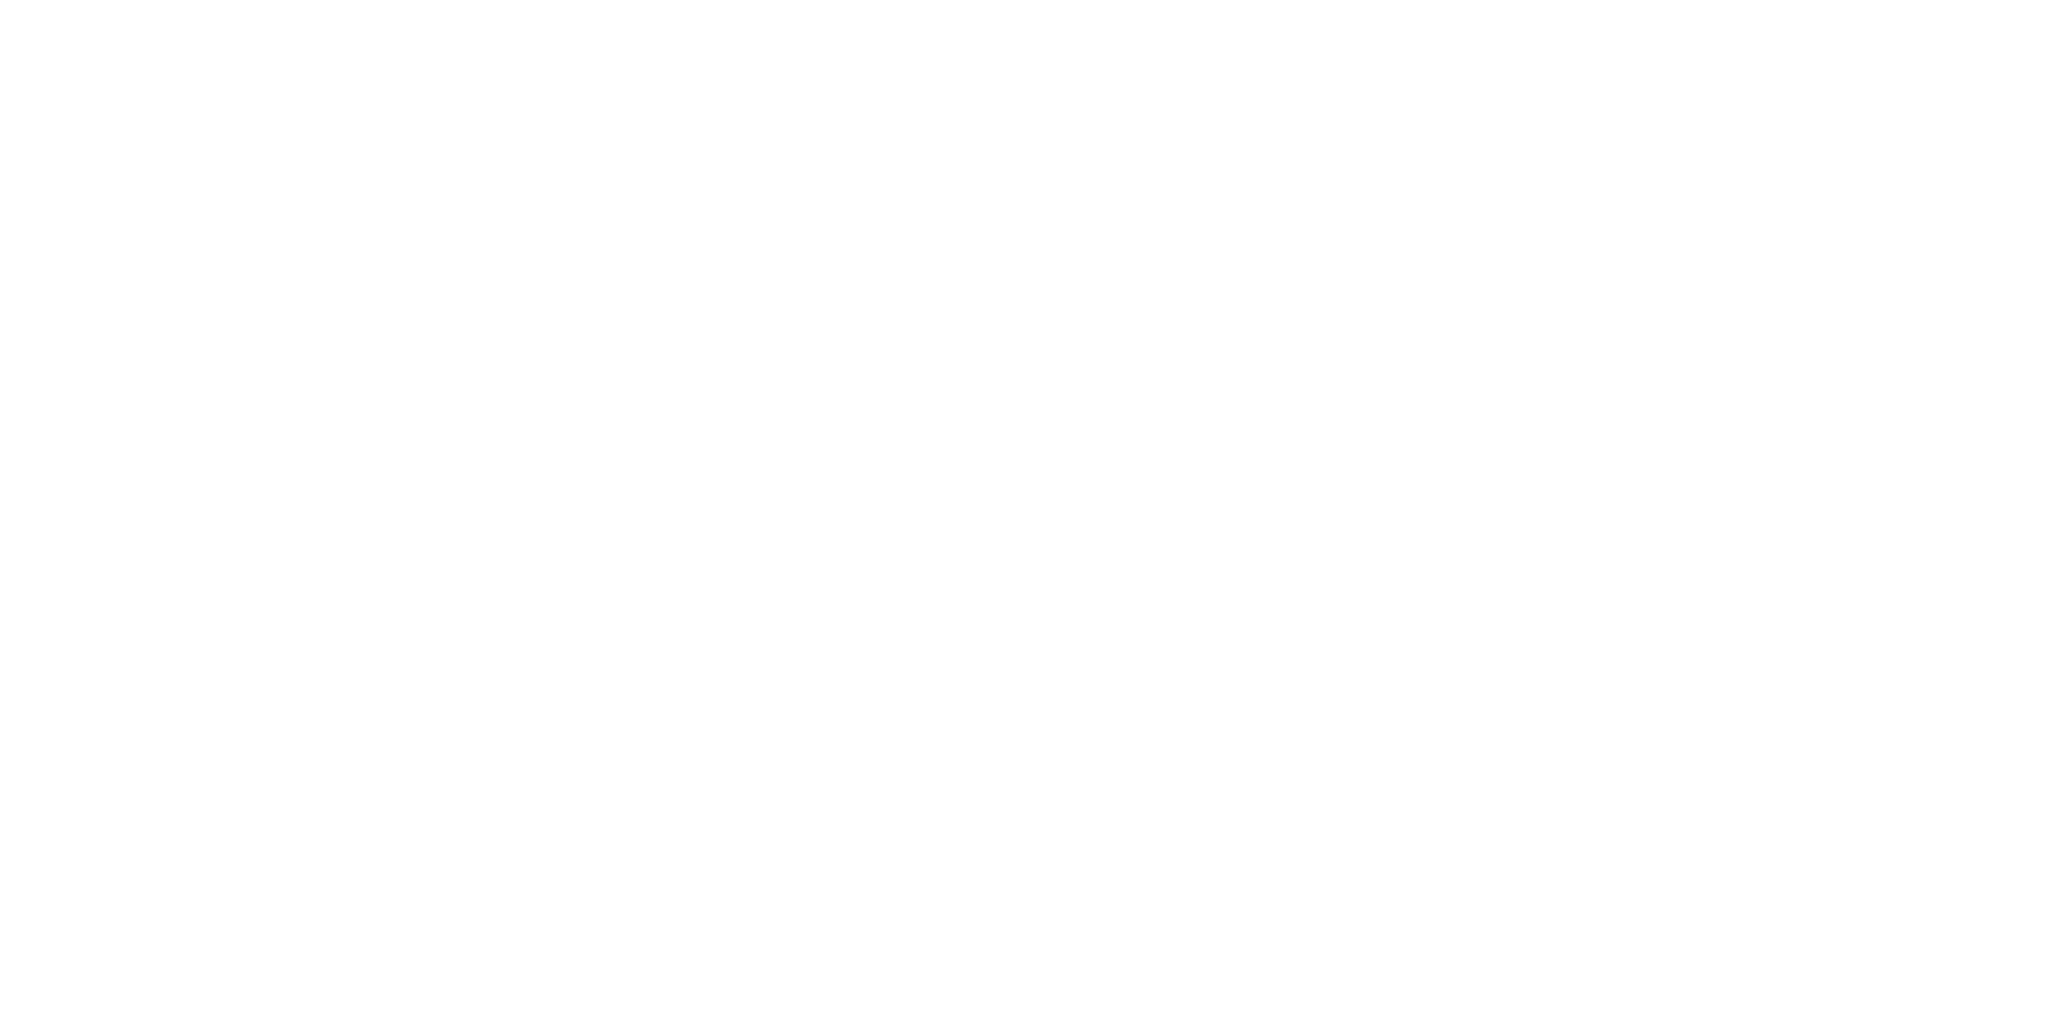 HEI bake&grill market